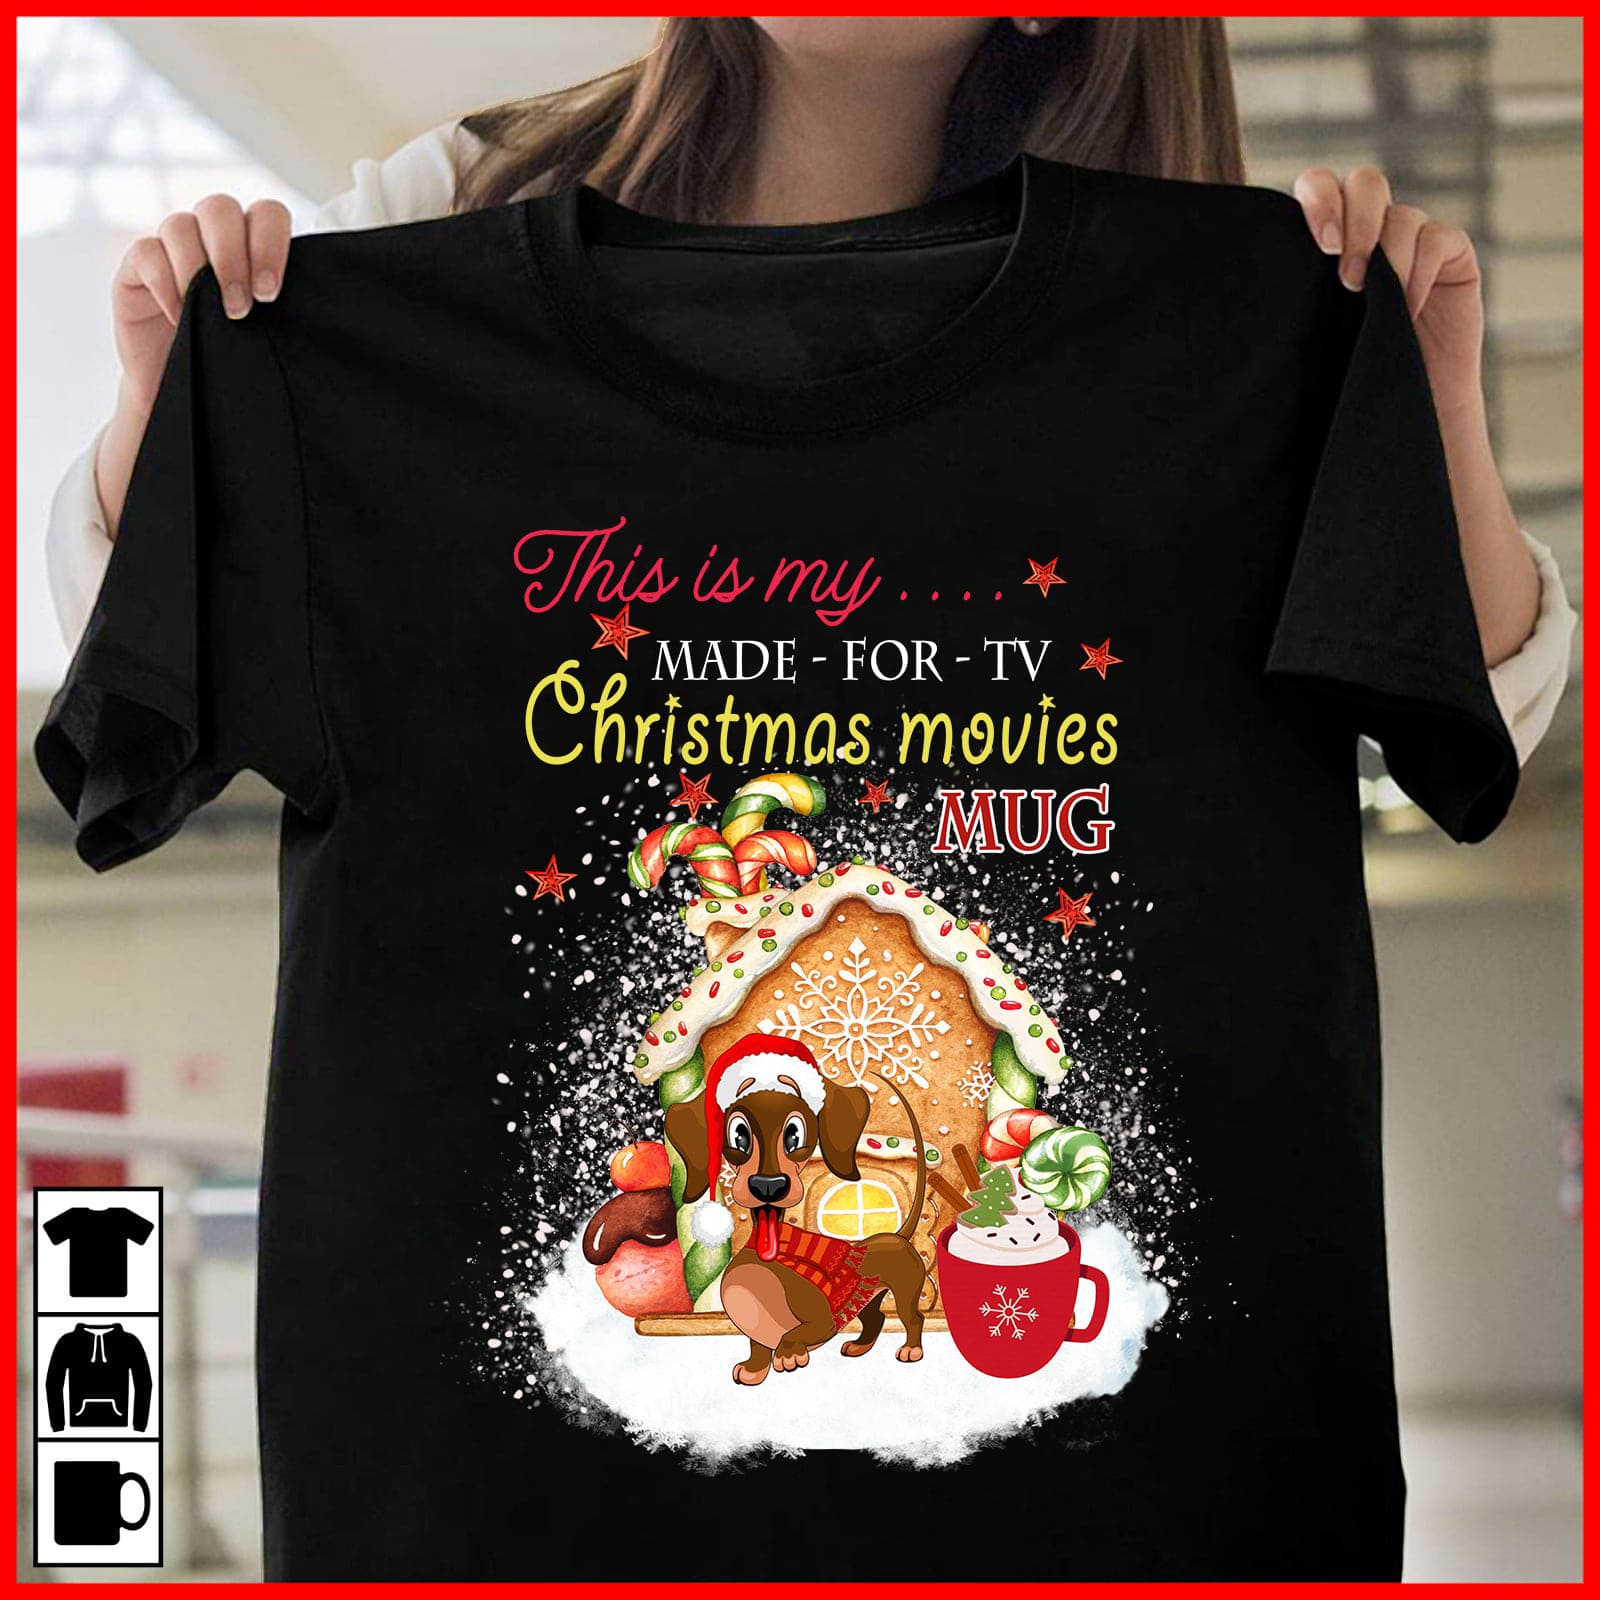 Made for TV - Christmas movies mug, Dachshund wearing Santa hat, Xmas day ugly sweater